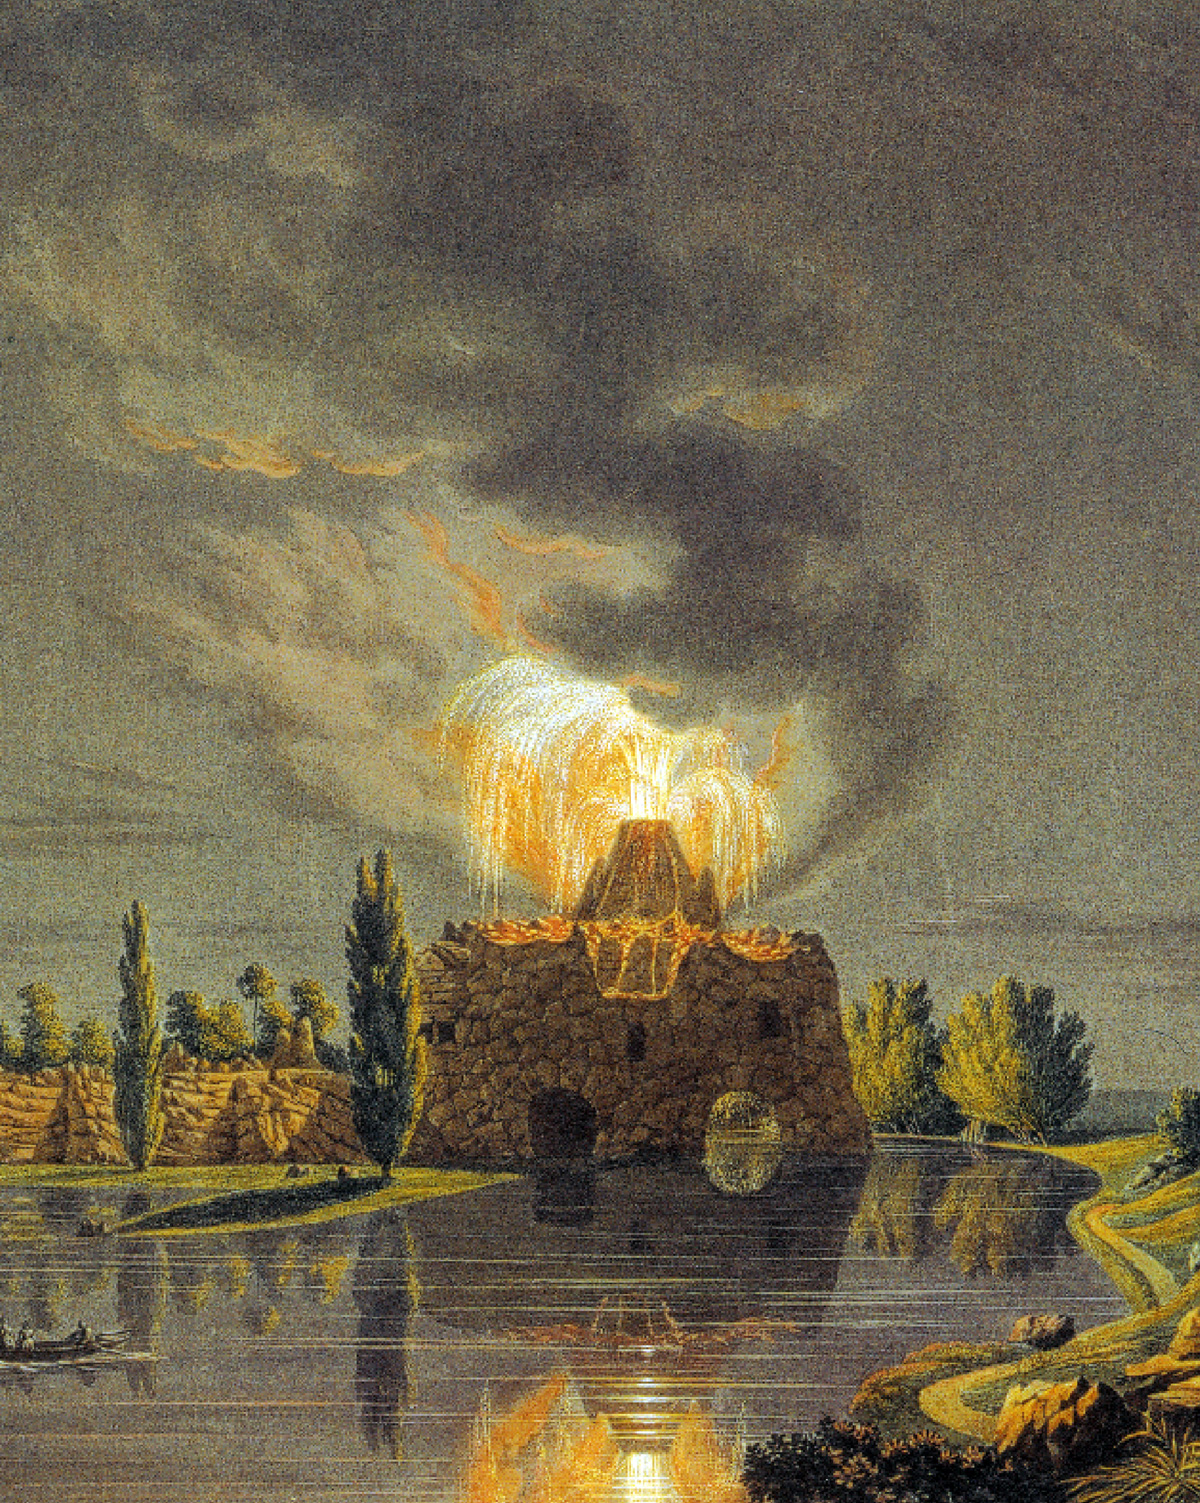 Prince Franz’s magnificent volcano created for his garden at Wörlitz circa seventeen eighty eight, as depicted by Karl Kuntz in seventeen ninety seven.